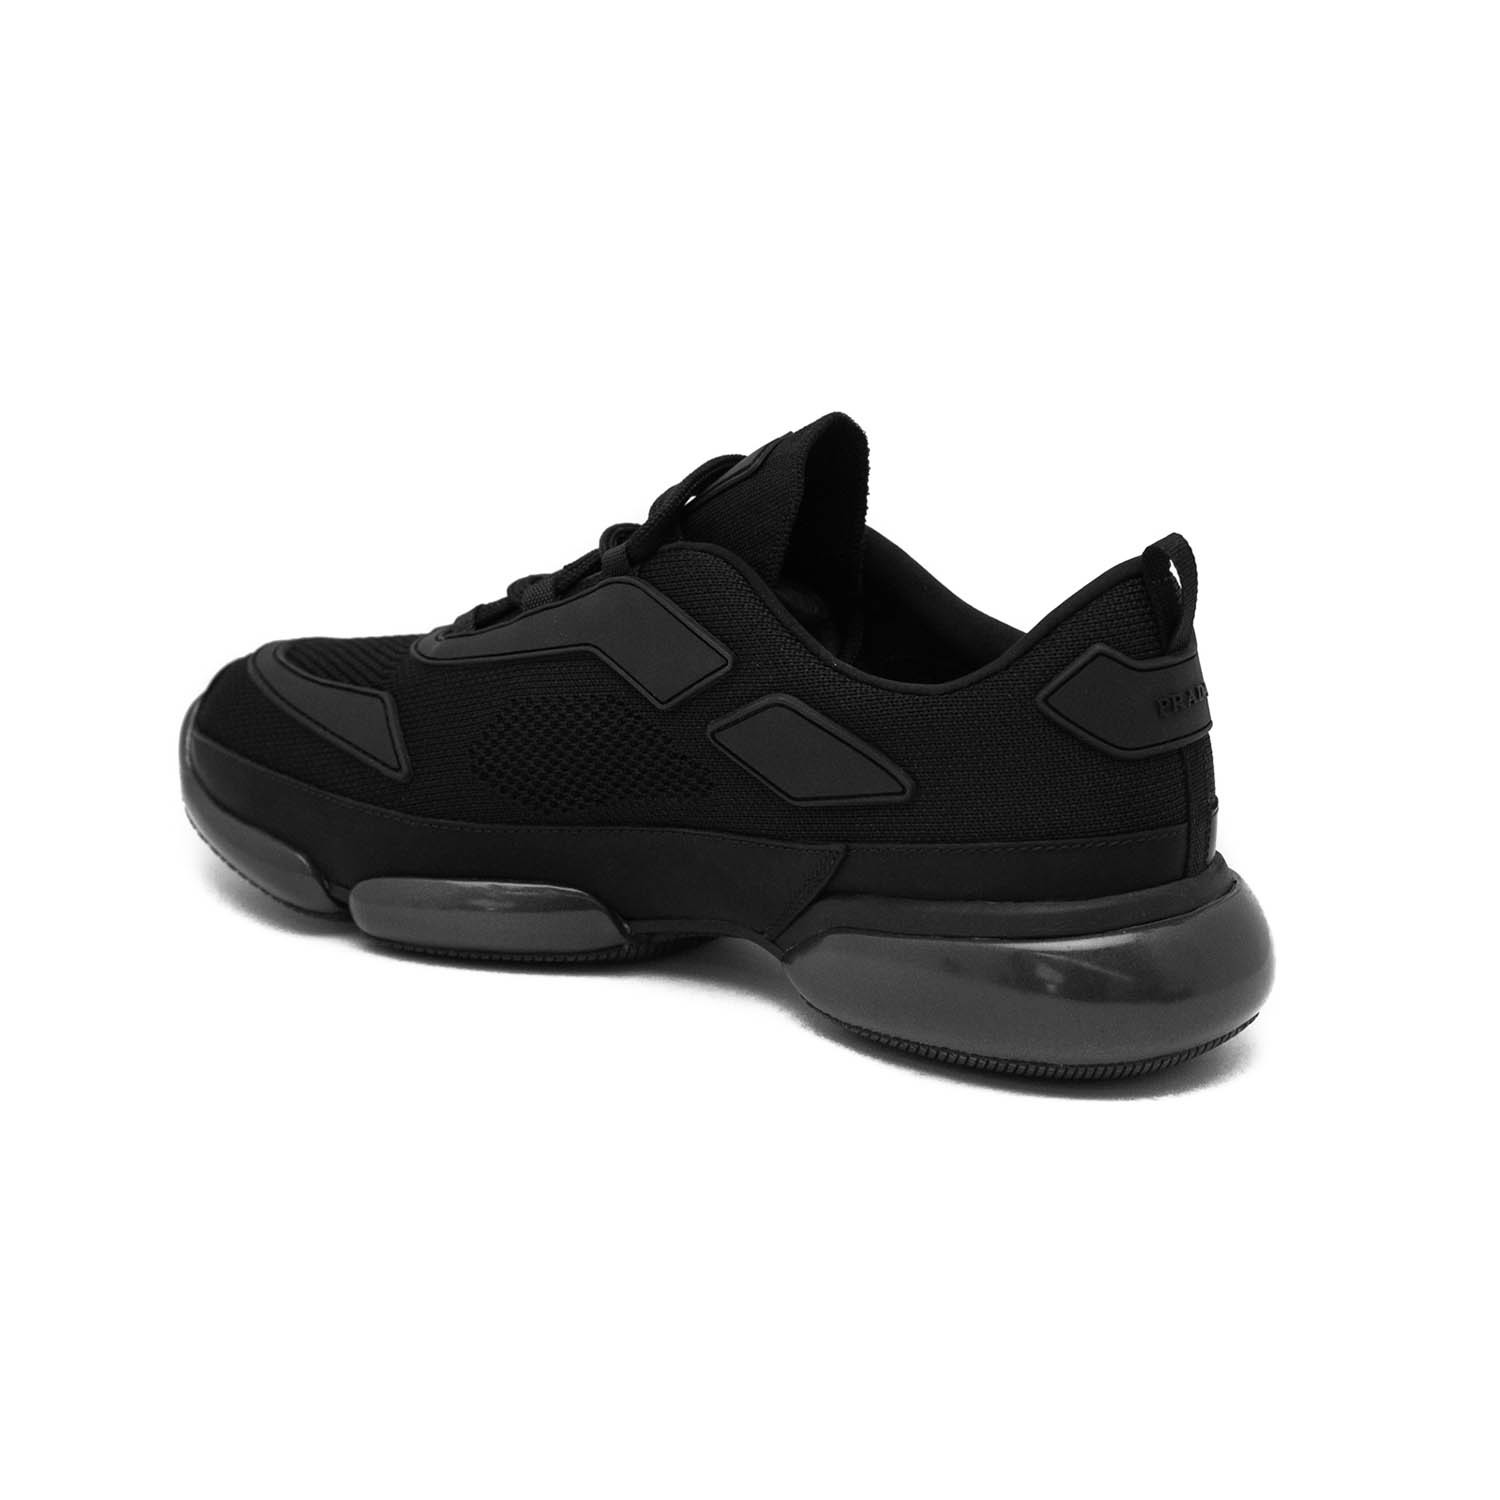 Prada // Knit Fabric Cloudbust Sneaker Shoes // Black (US: 7) - Men's ...